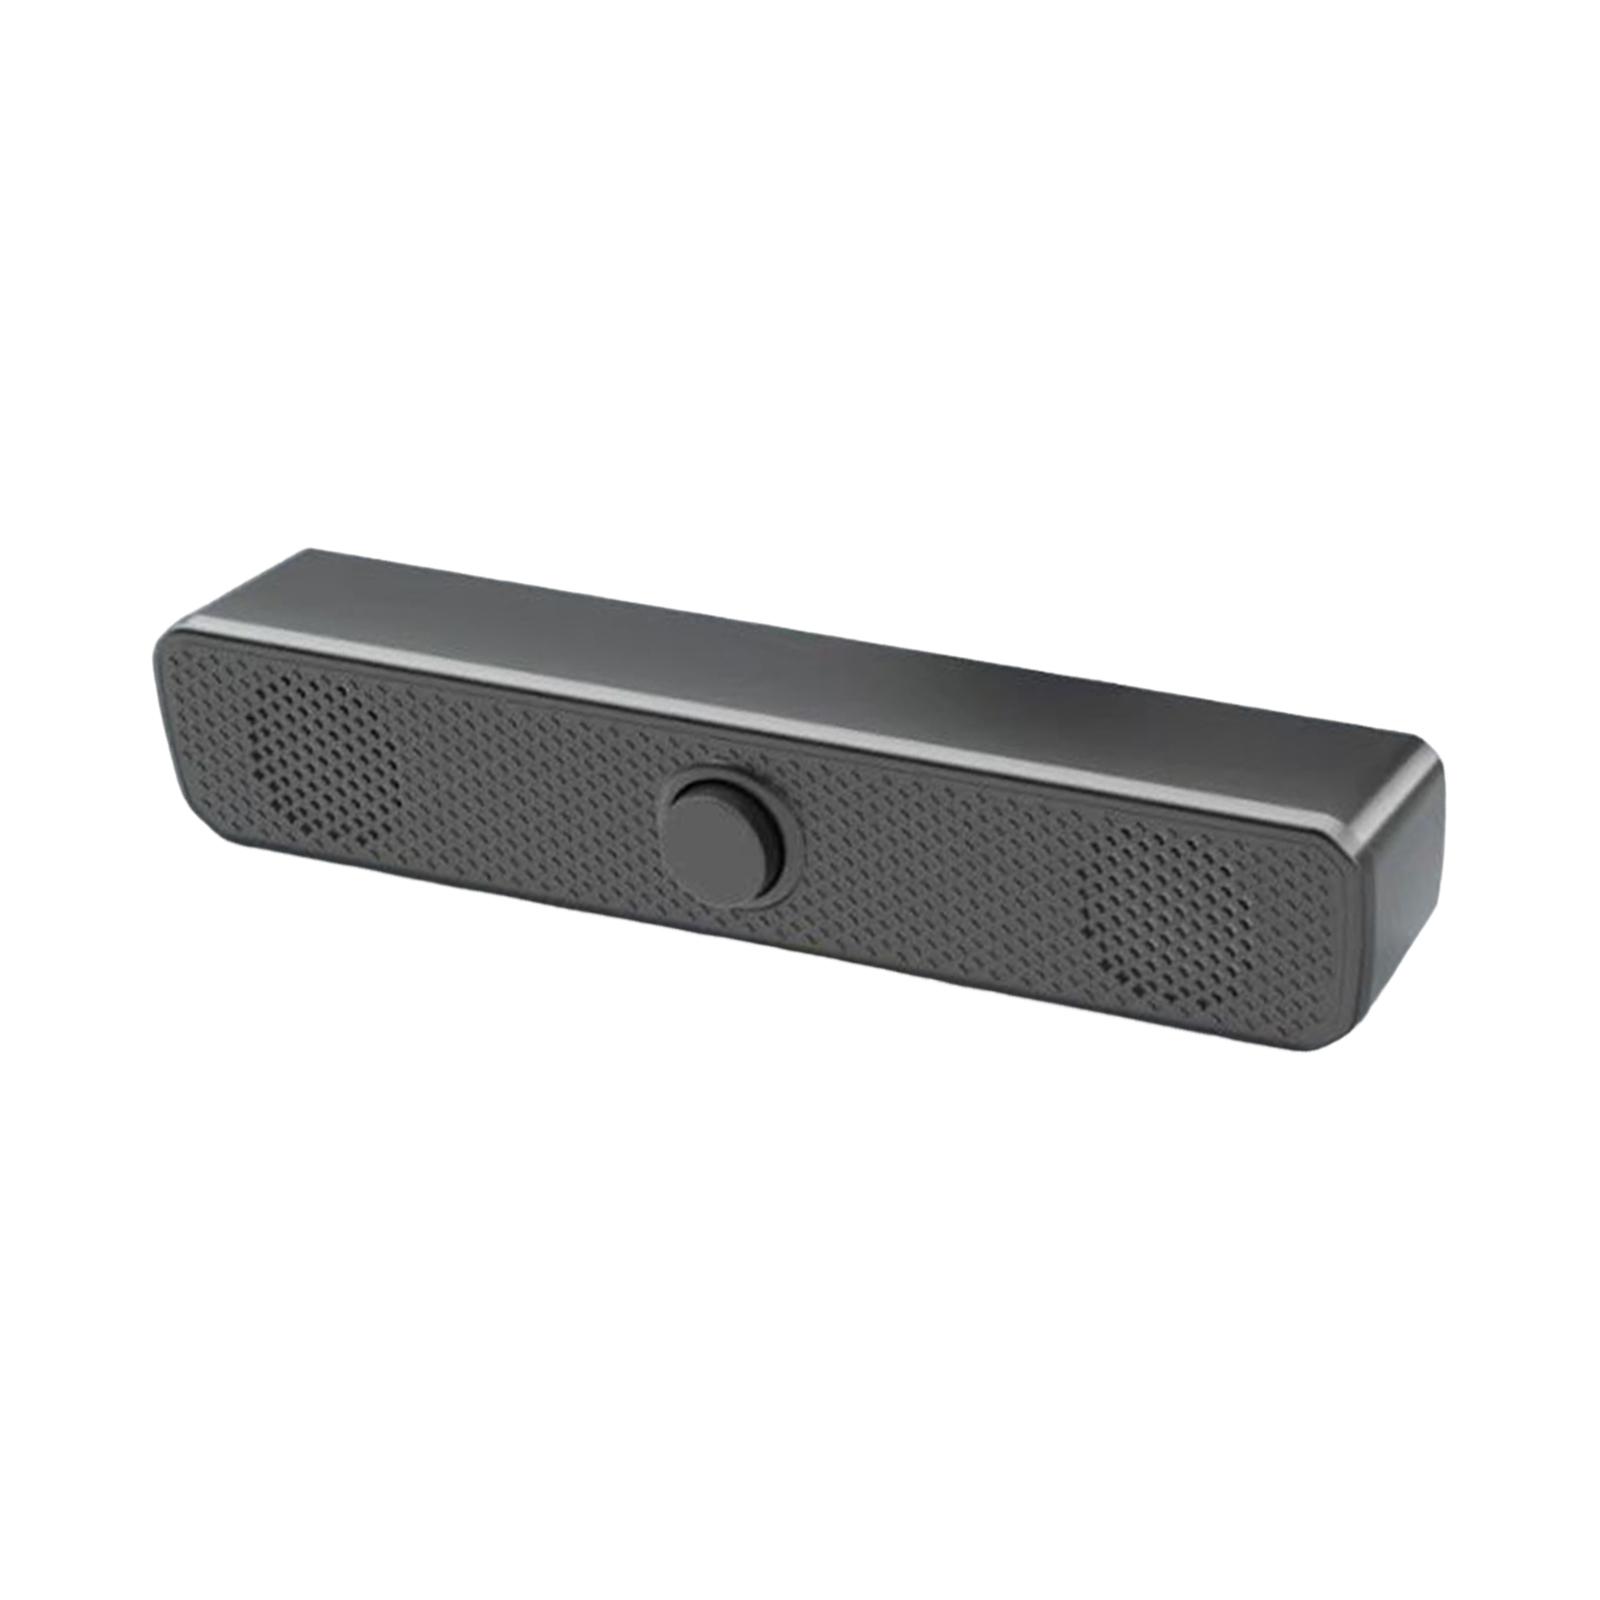 PC Gaming Speakers HiFi Sound Computer Sound Bar for Desktop Notebook Phones - image 4 of 8